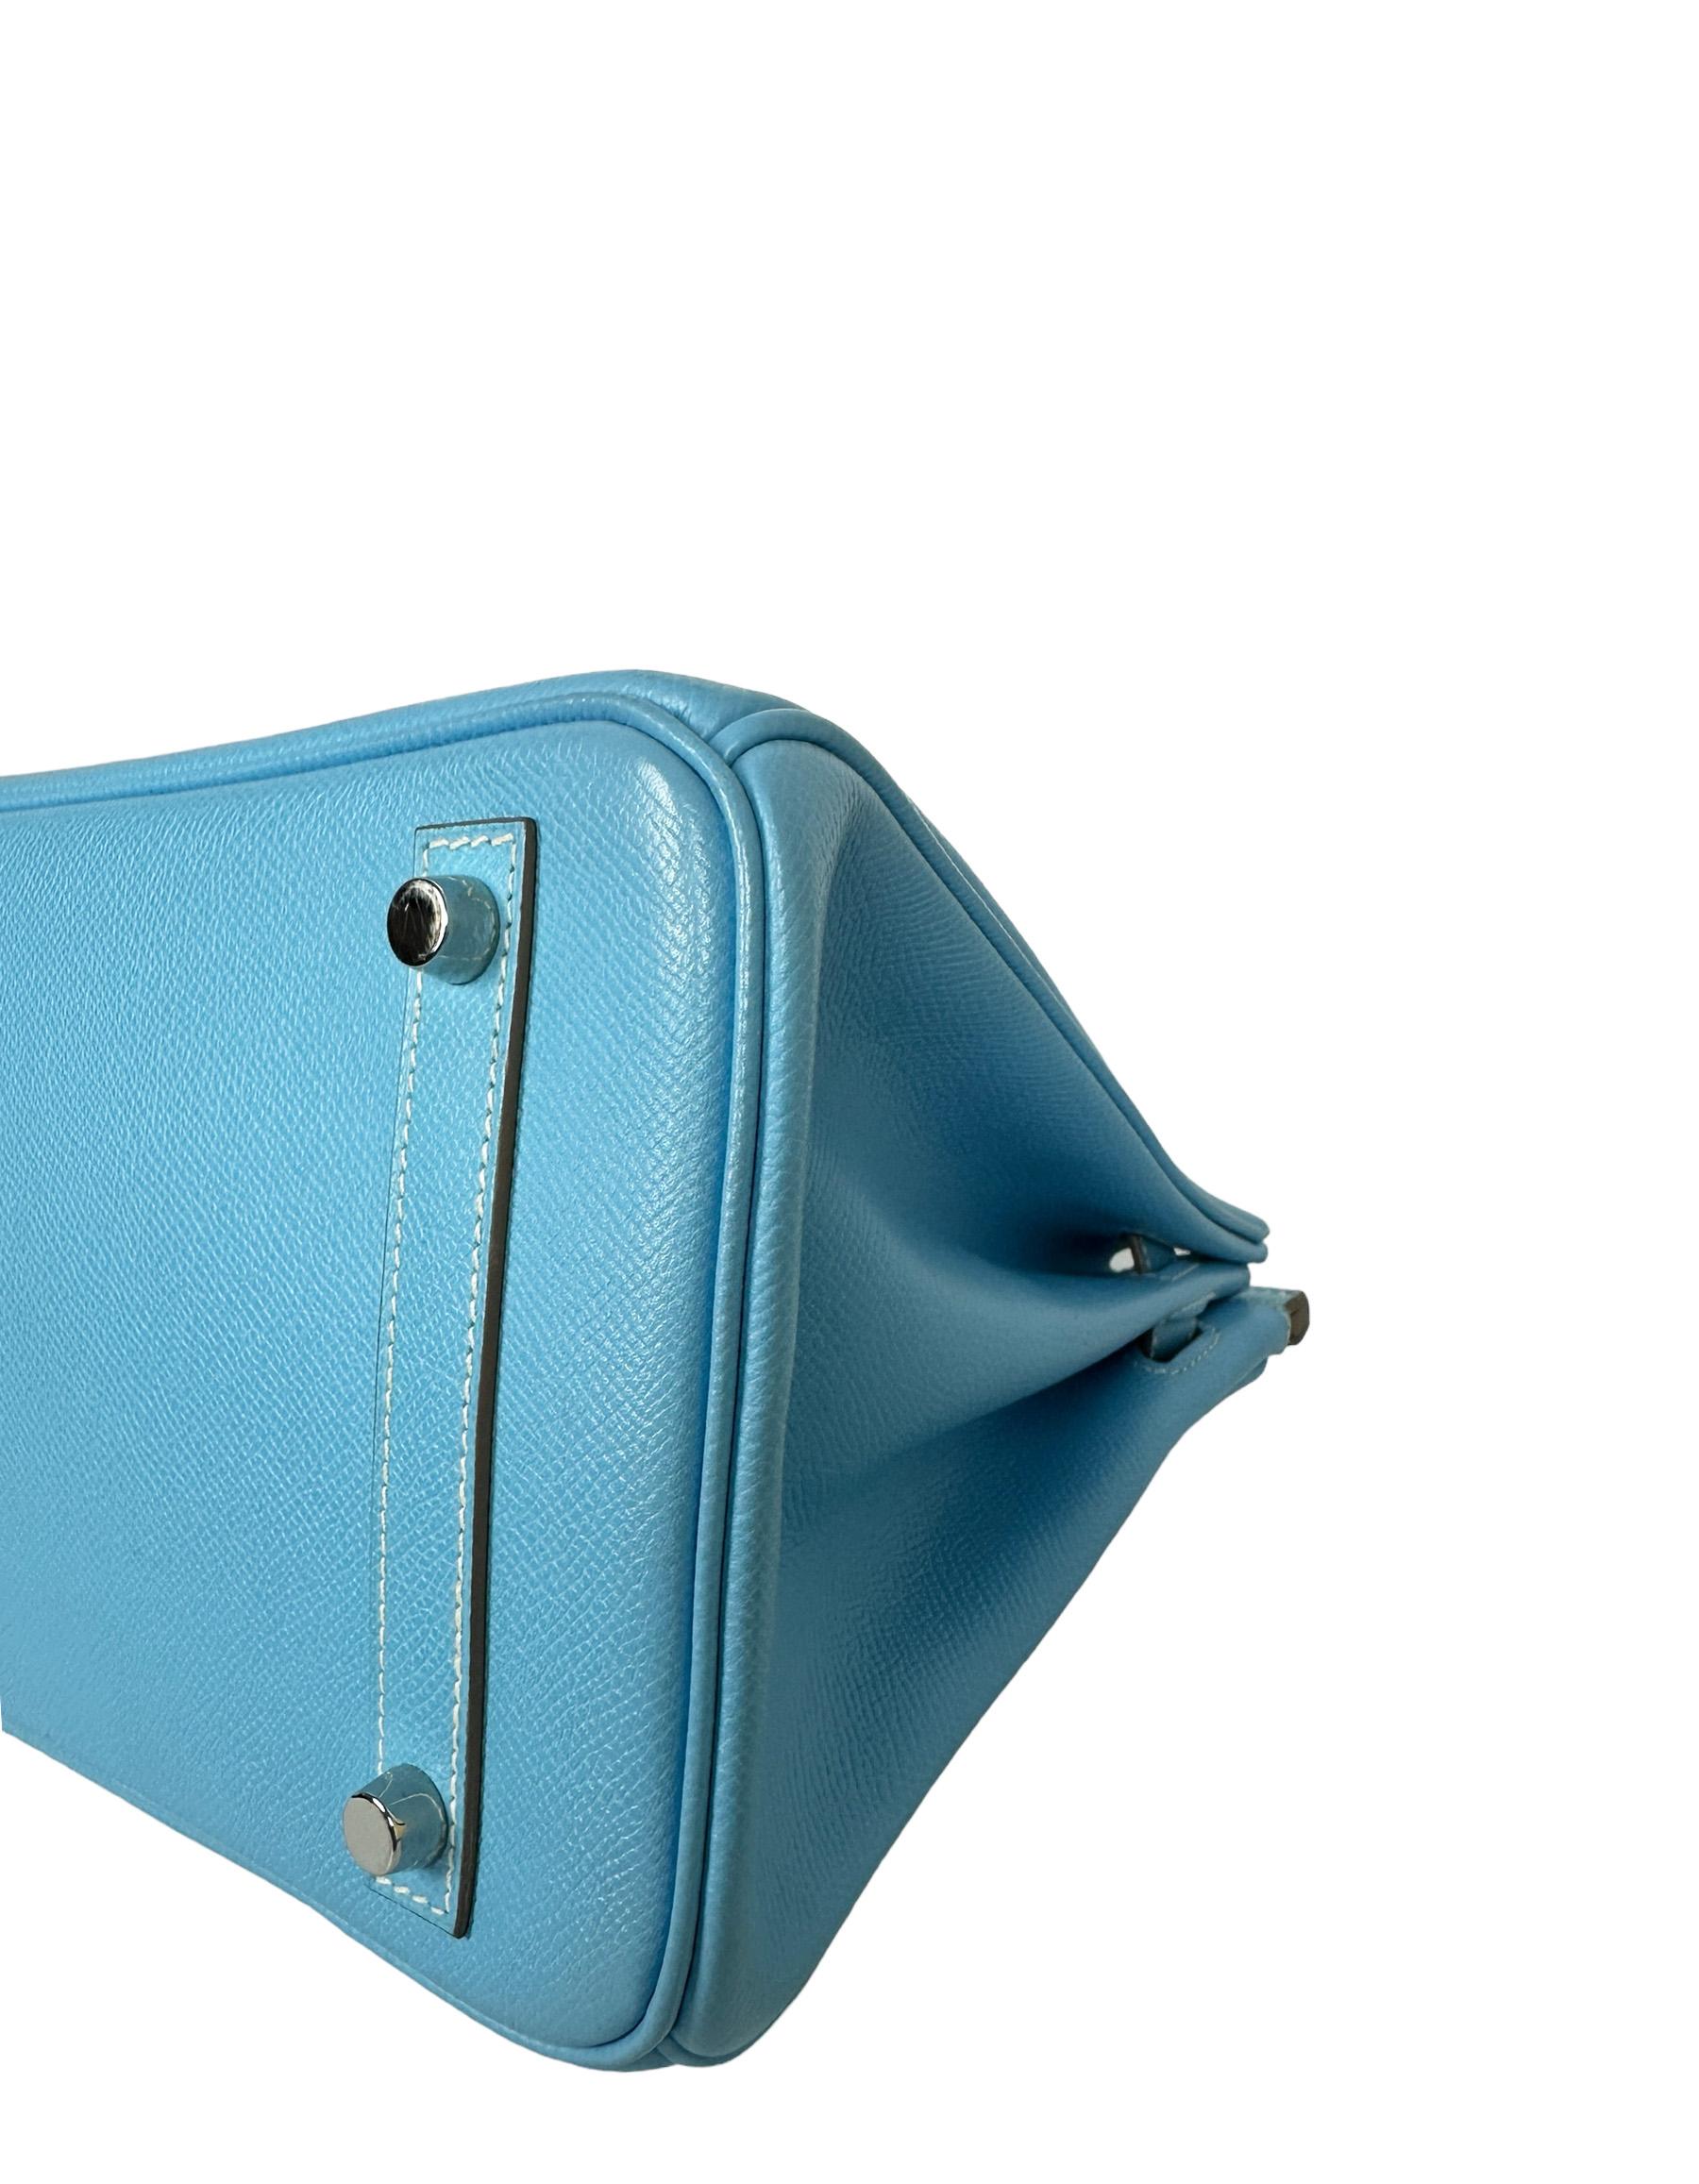 Hermes Blue Celeste/ Mykonos Epsom Leather 30cm Candy Birkin Bag PHW For Sale 2